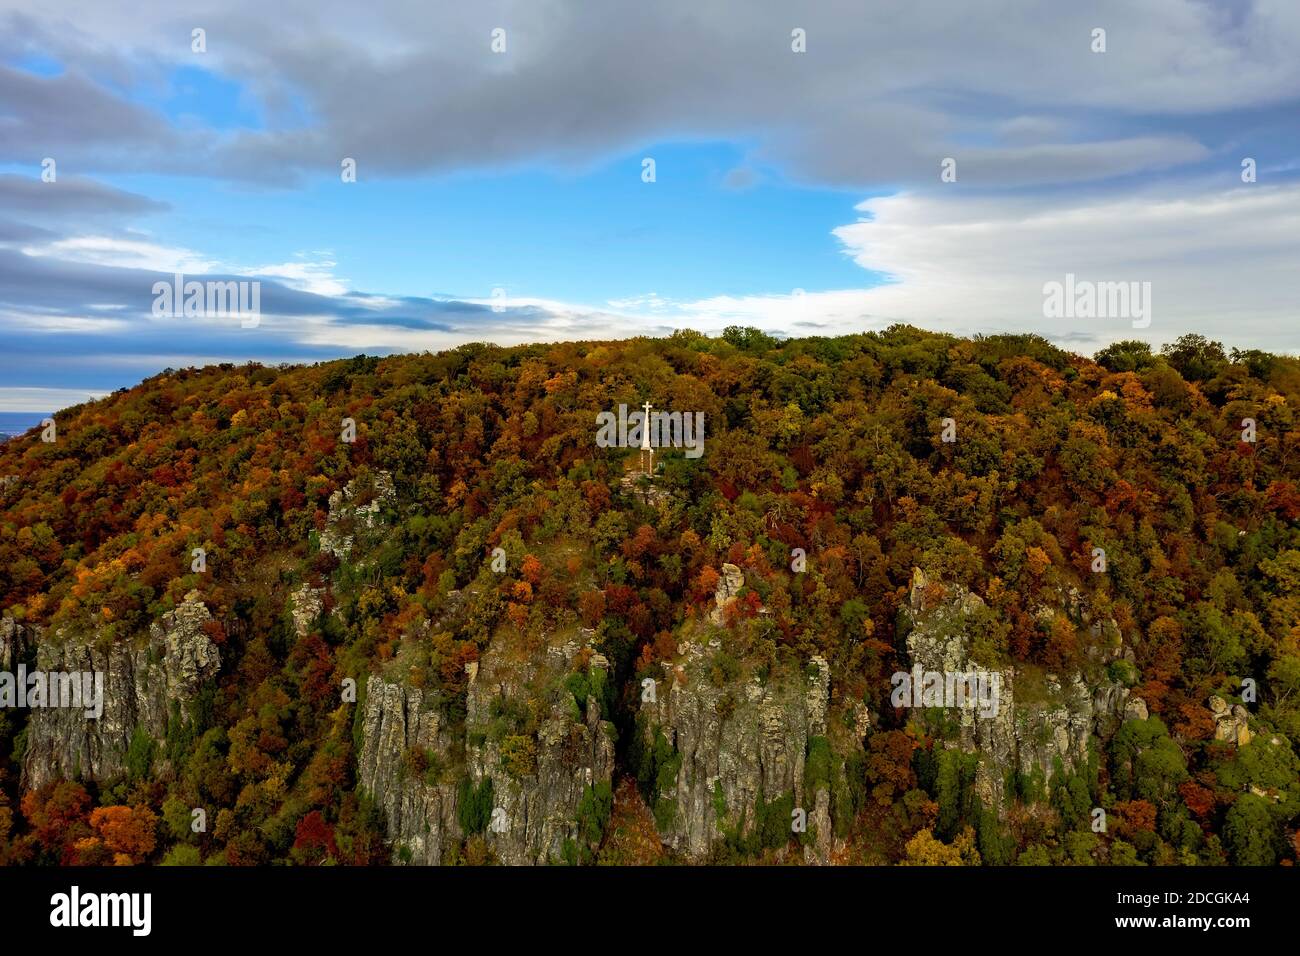 Saint Gerorge Hill in Hungary badacsony region. Amazing vulcanic mountain where giant basalt columns  located. Beautiful autumn colorful photo. Perfed Stock Photo